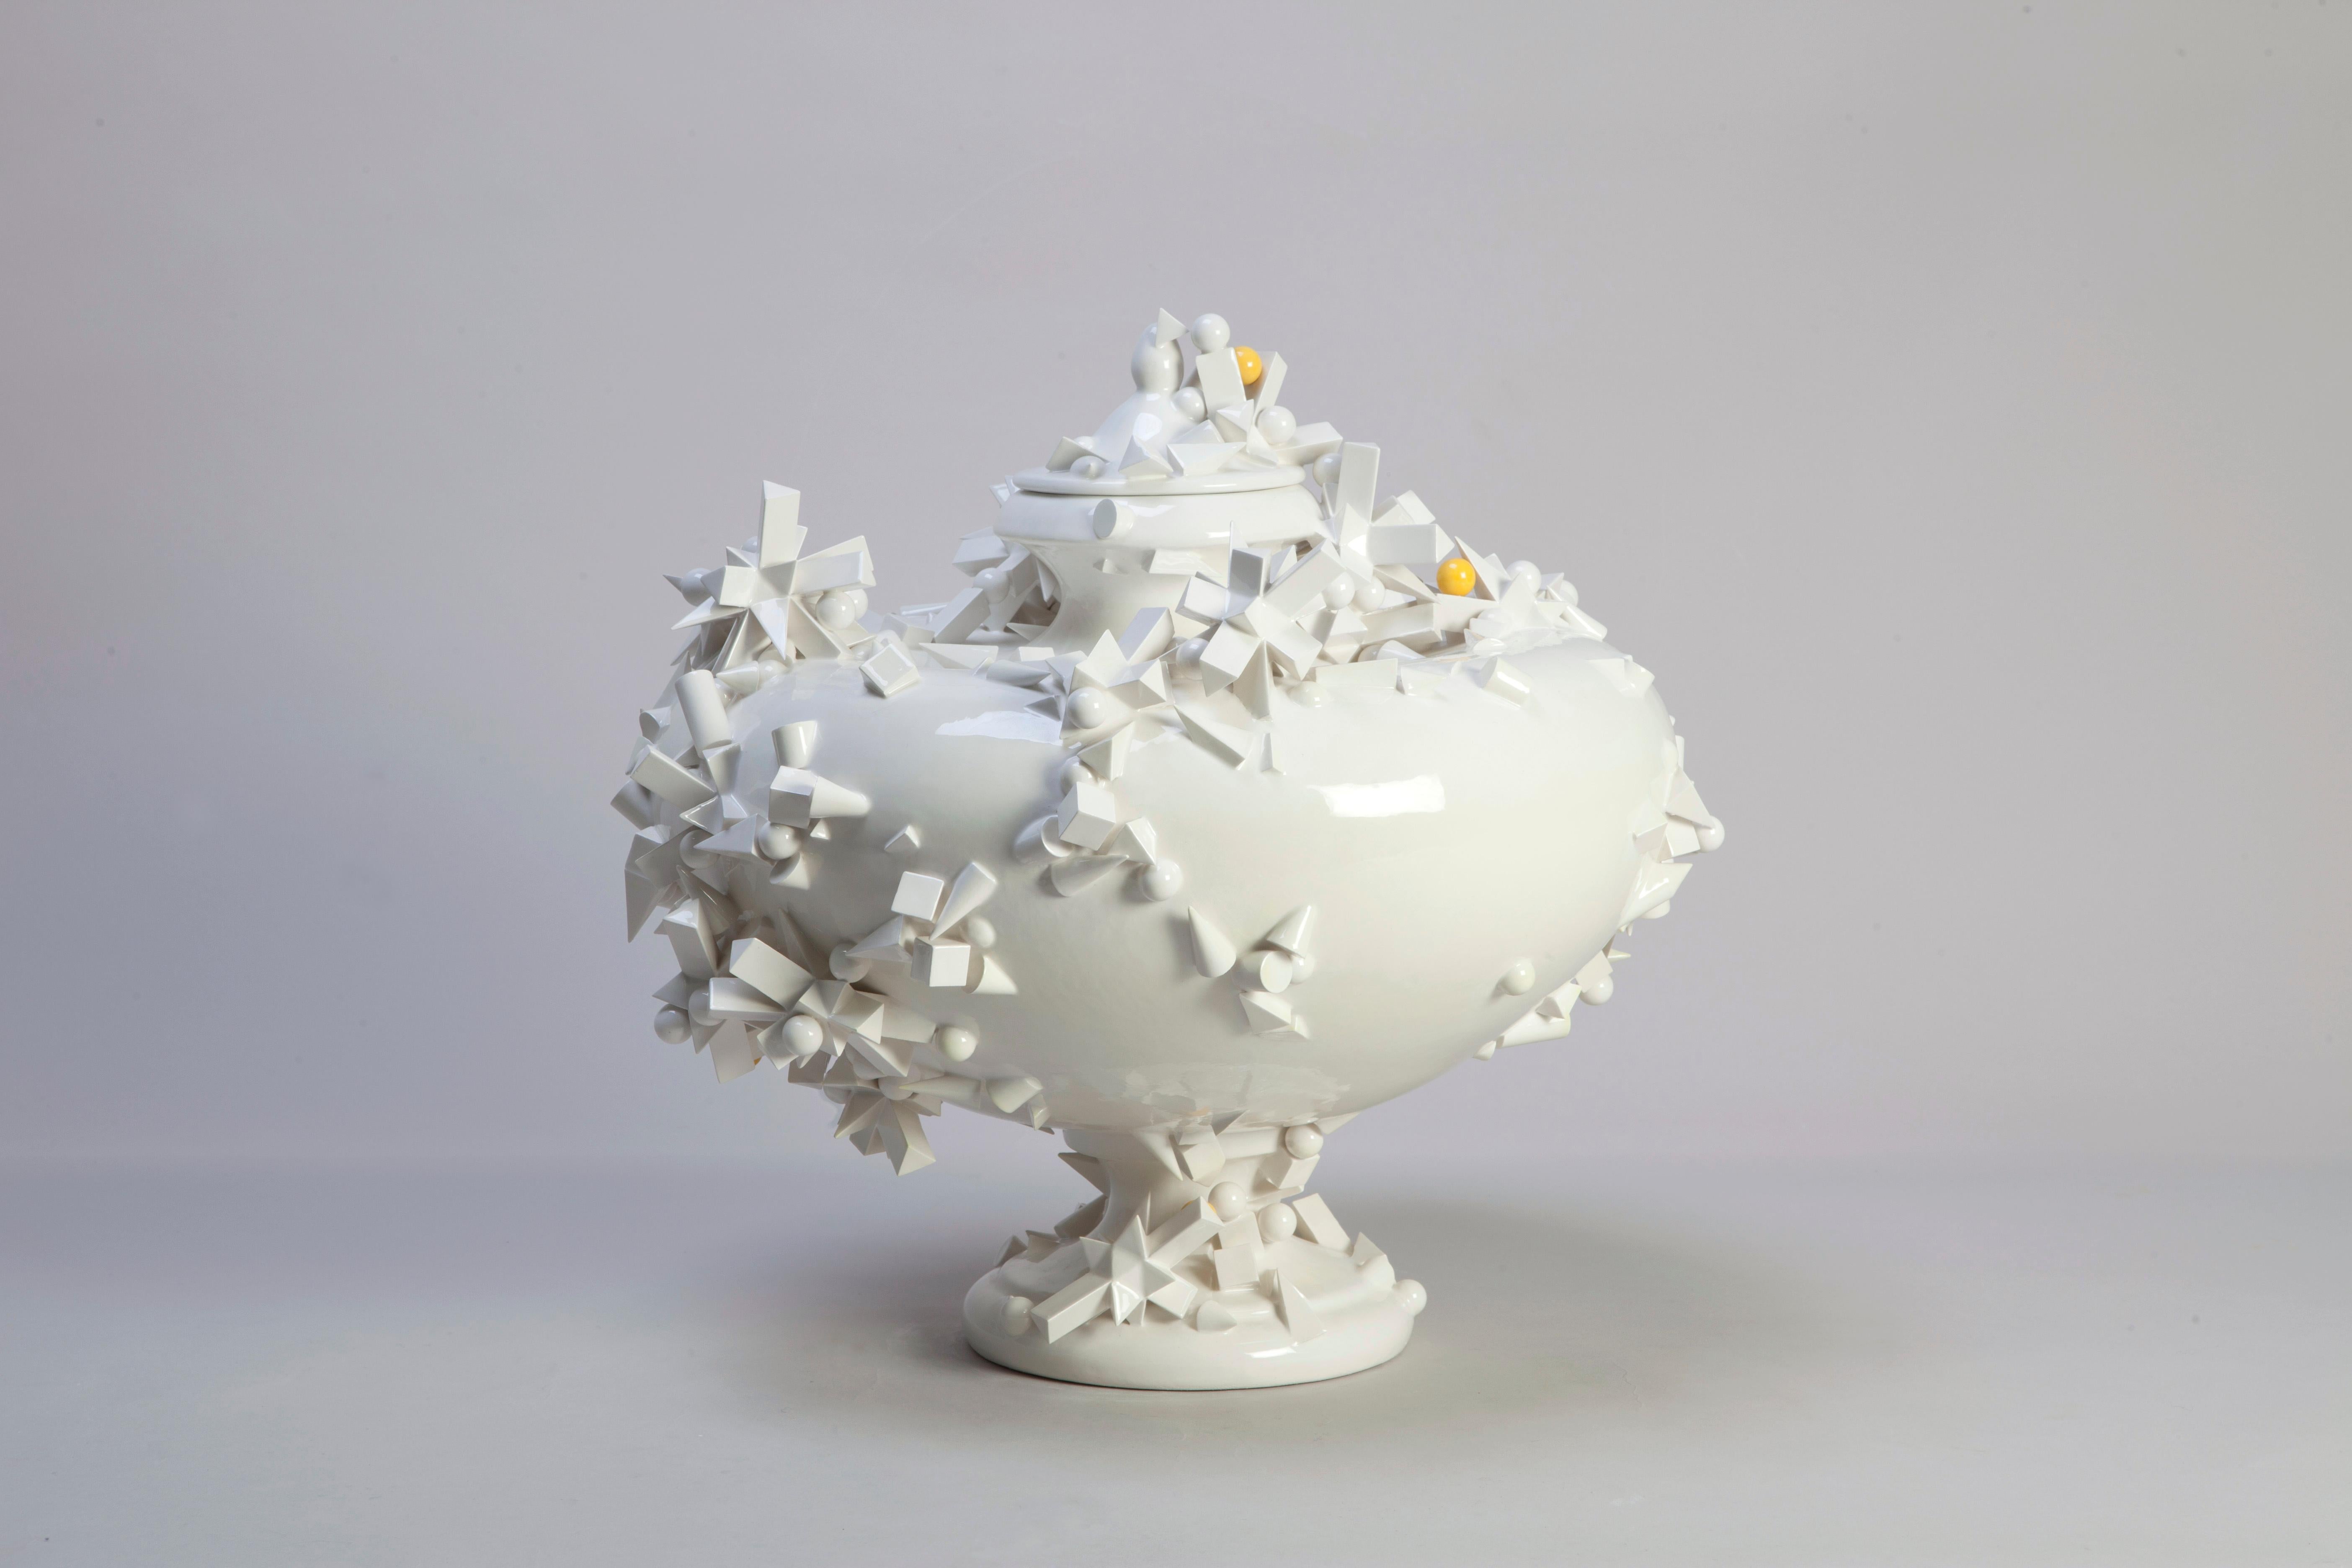 Glazed Urn by Andrea Salvatori, White Ceramic Sculpture 21st Century Contemporary